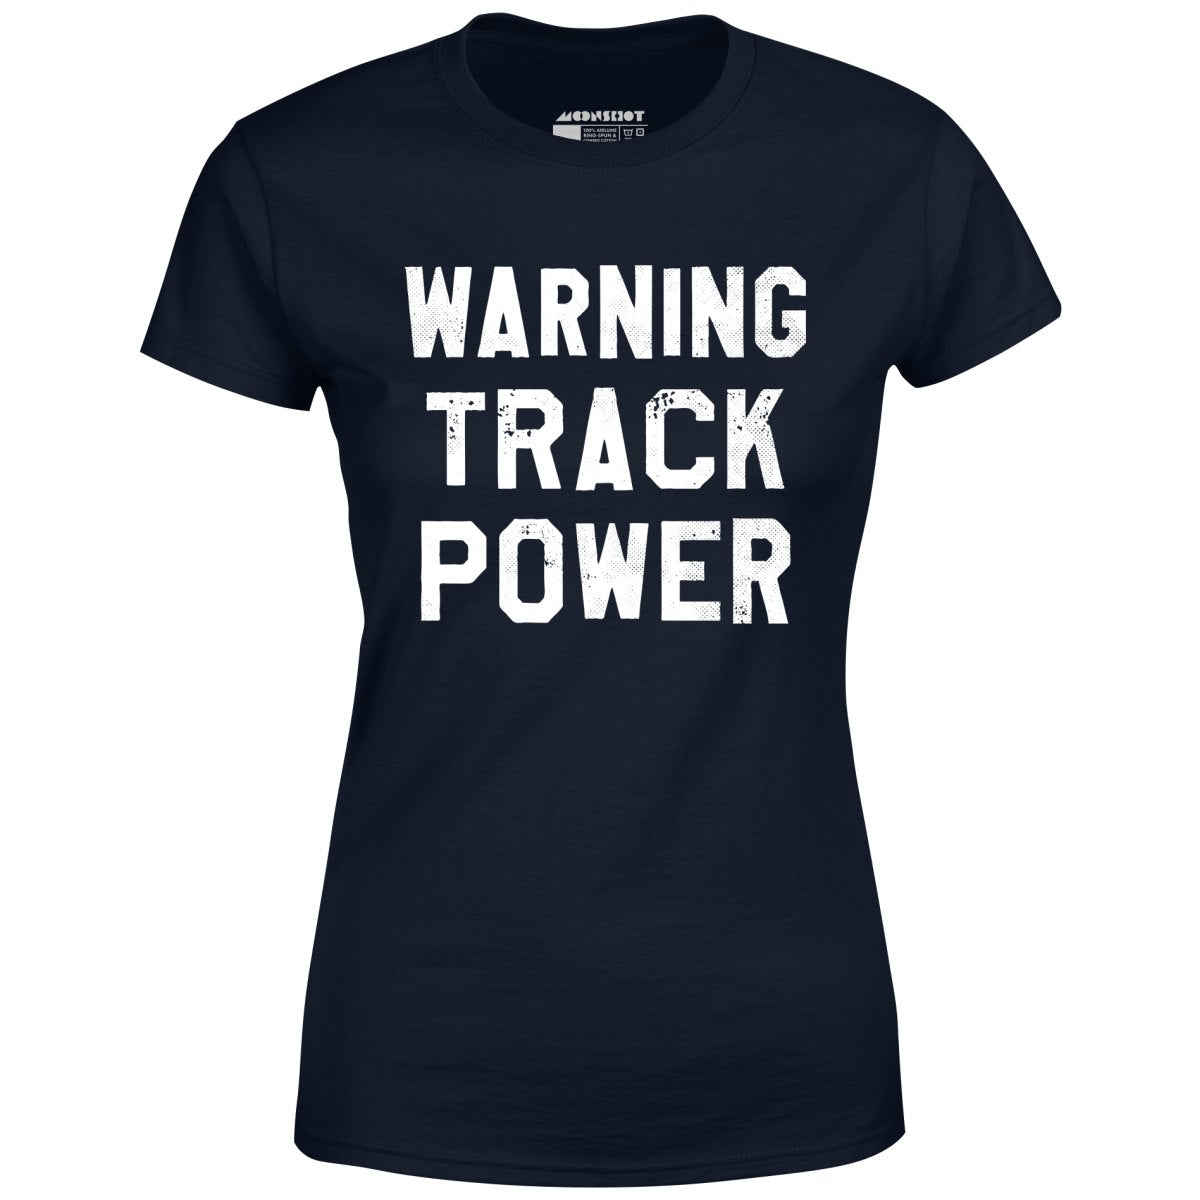 Warning Track Power - Women's T-Shirt